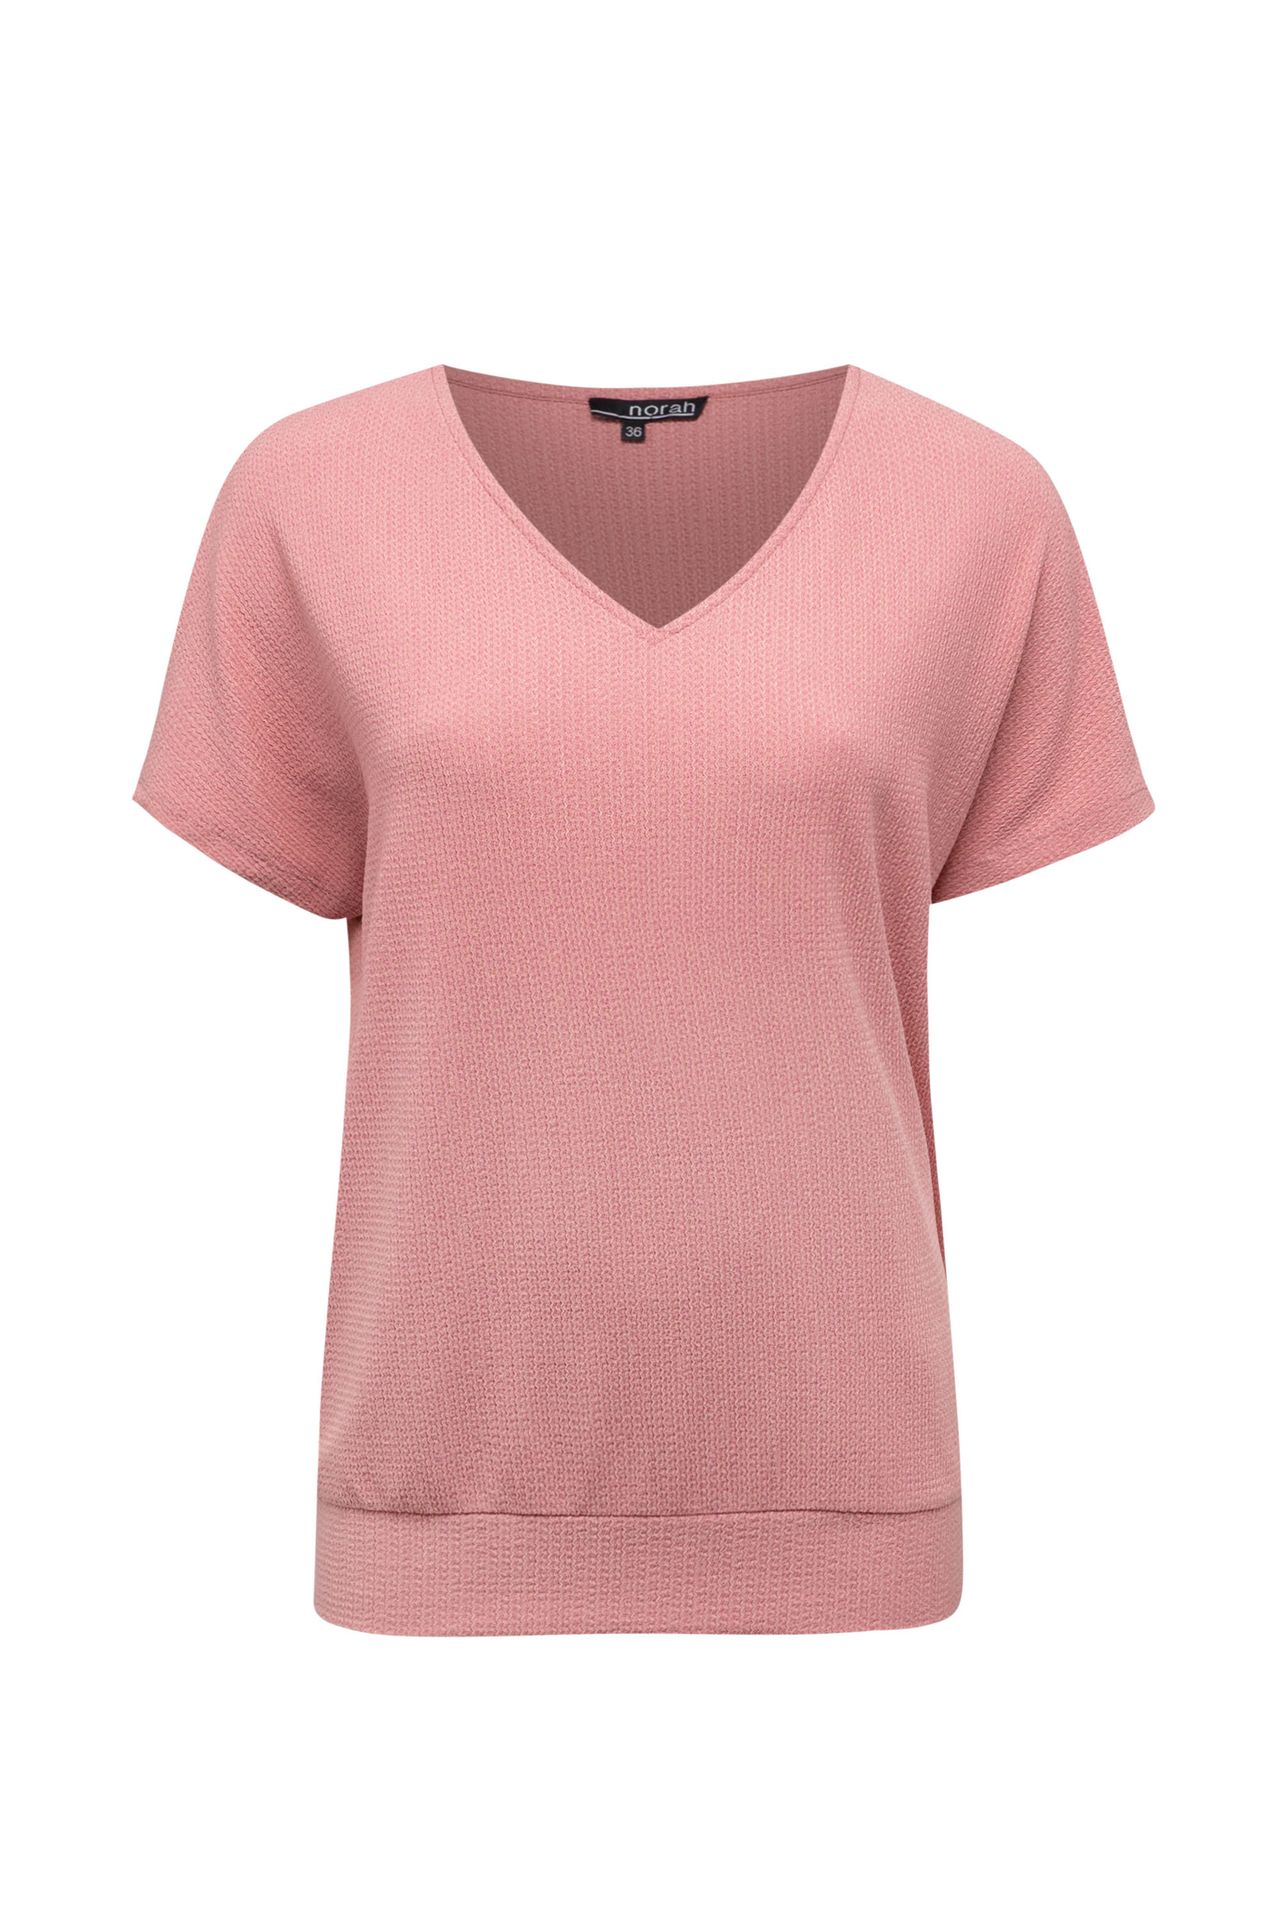 Norah Oud-roze shirt dark rose 213678-998